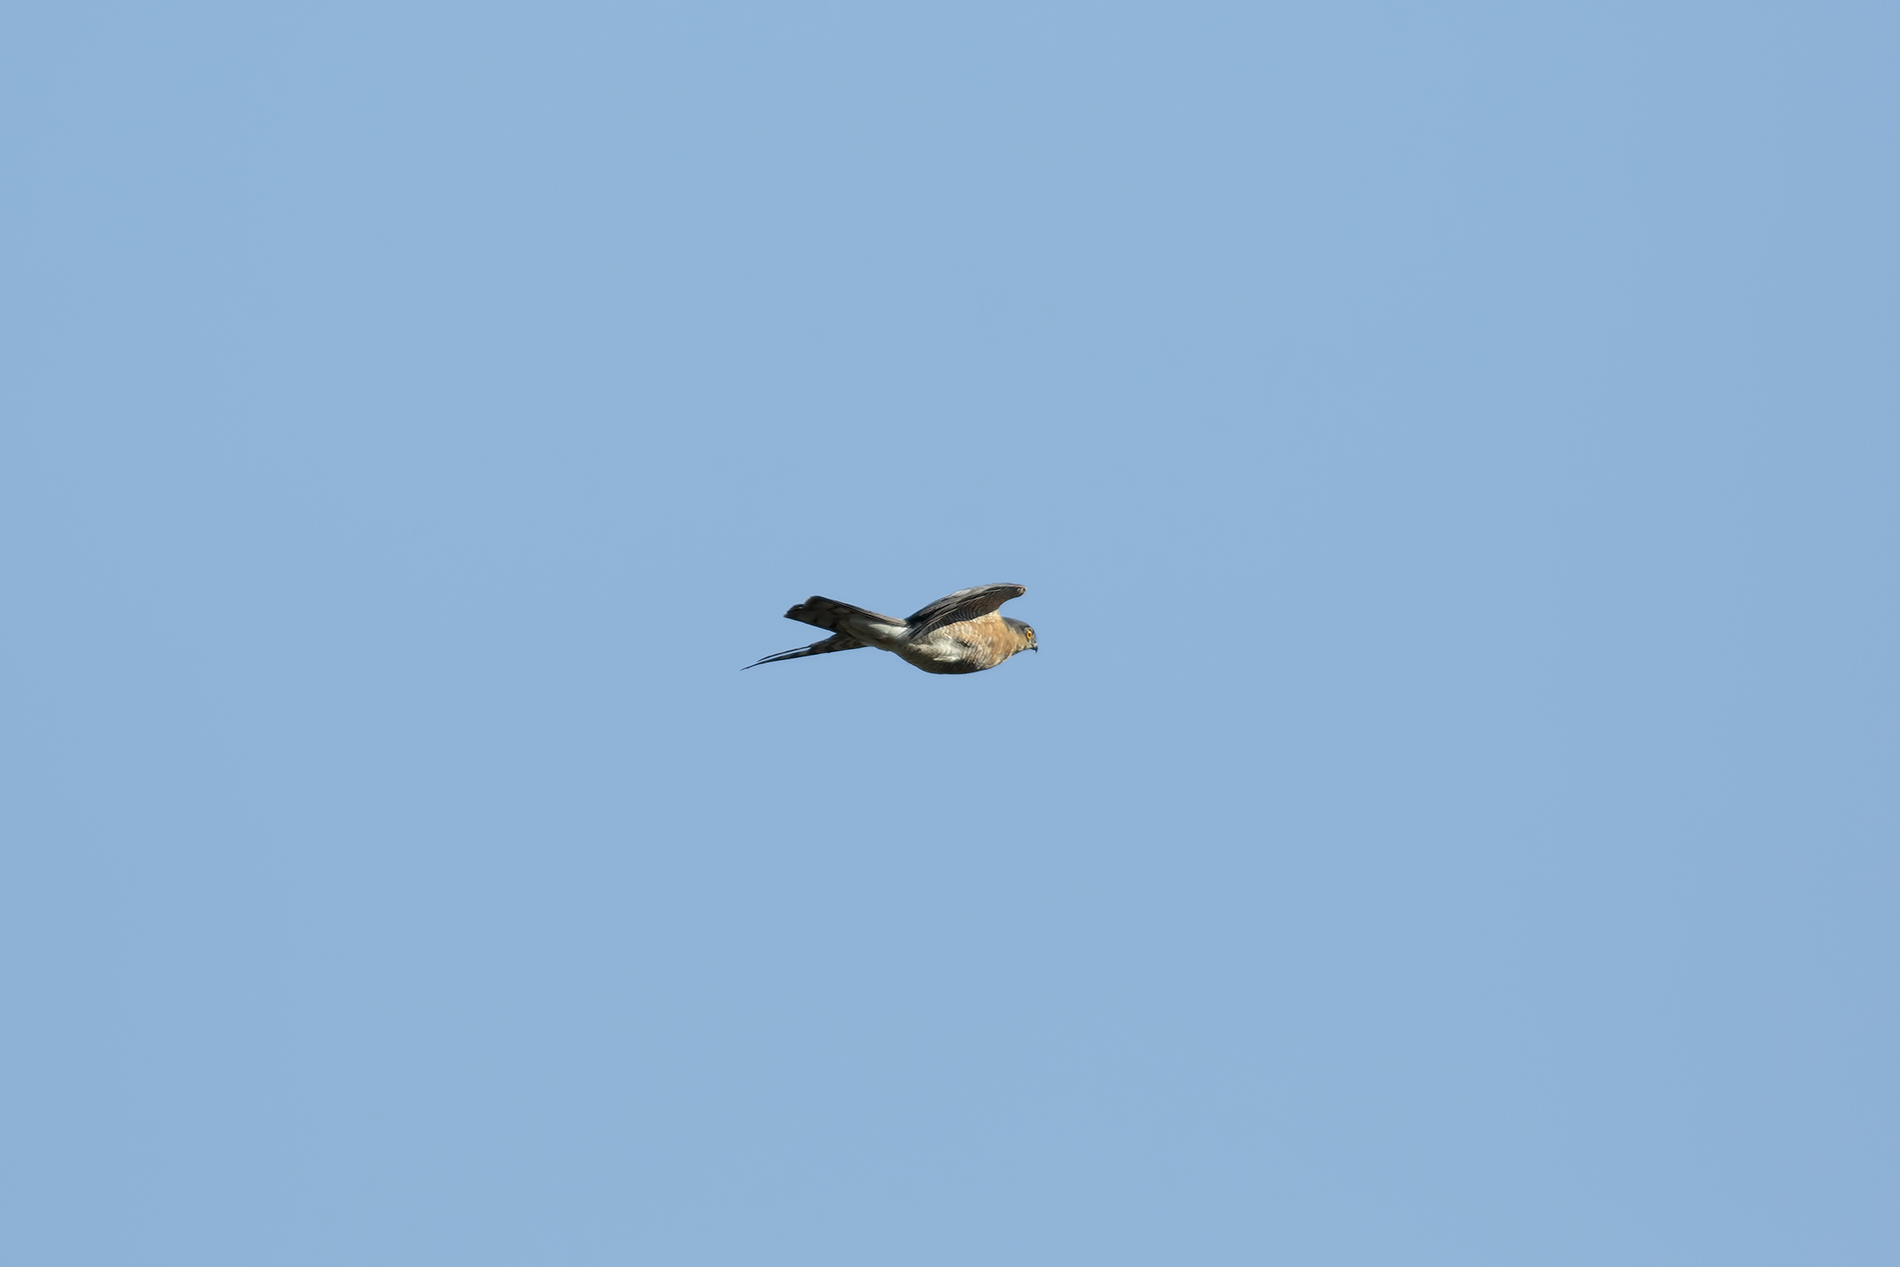 Sudden Passage (male sparrow)...